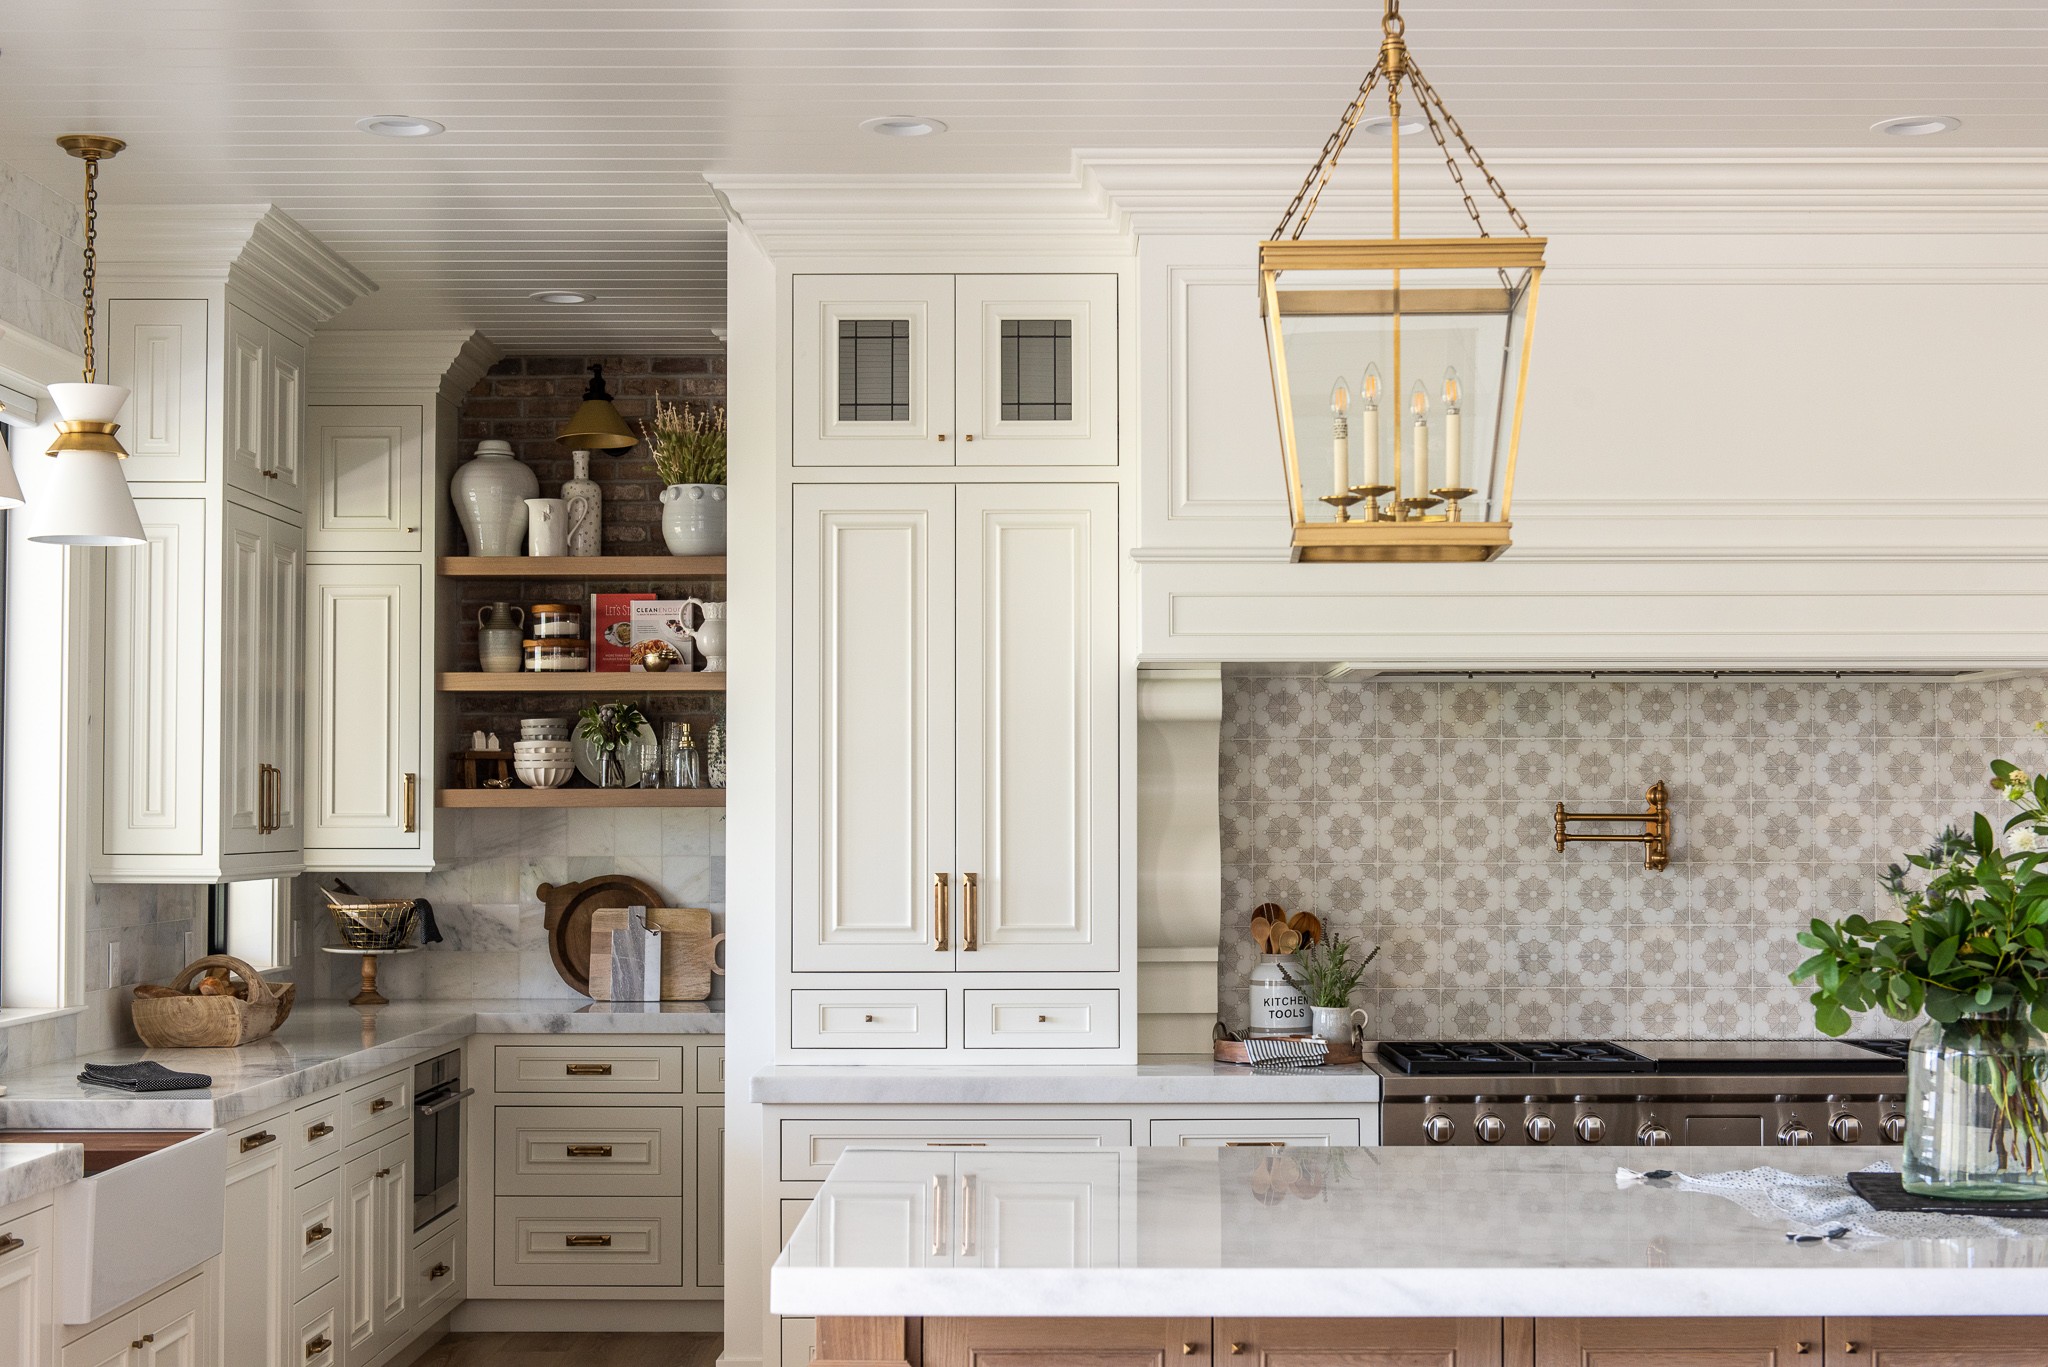 white dove kitchen cabinets with quartz countertops